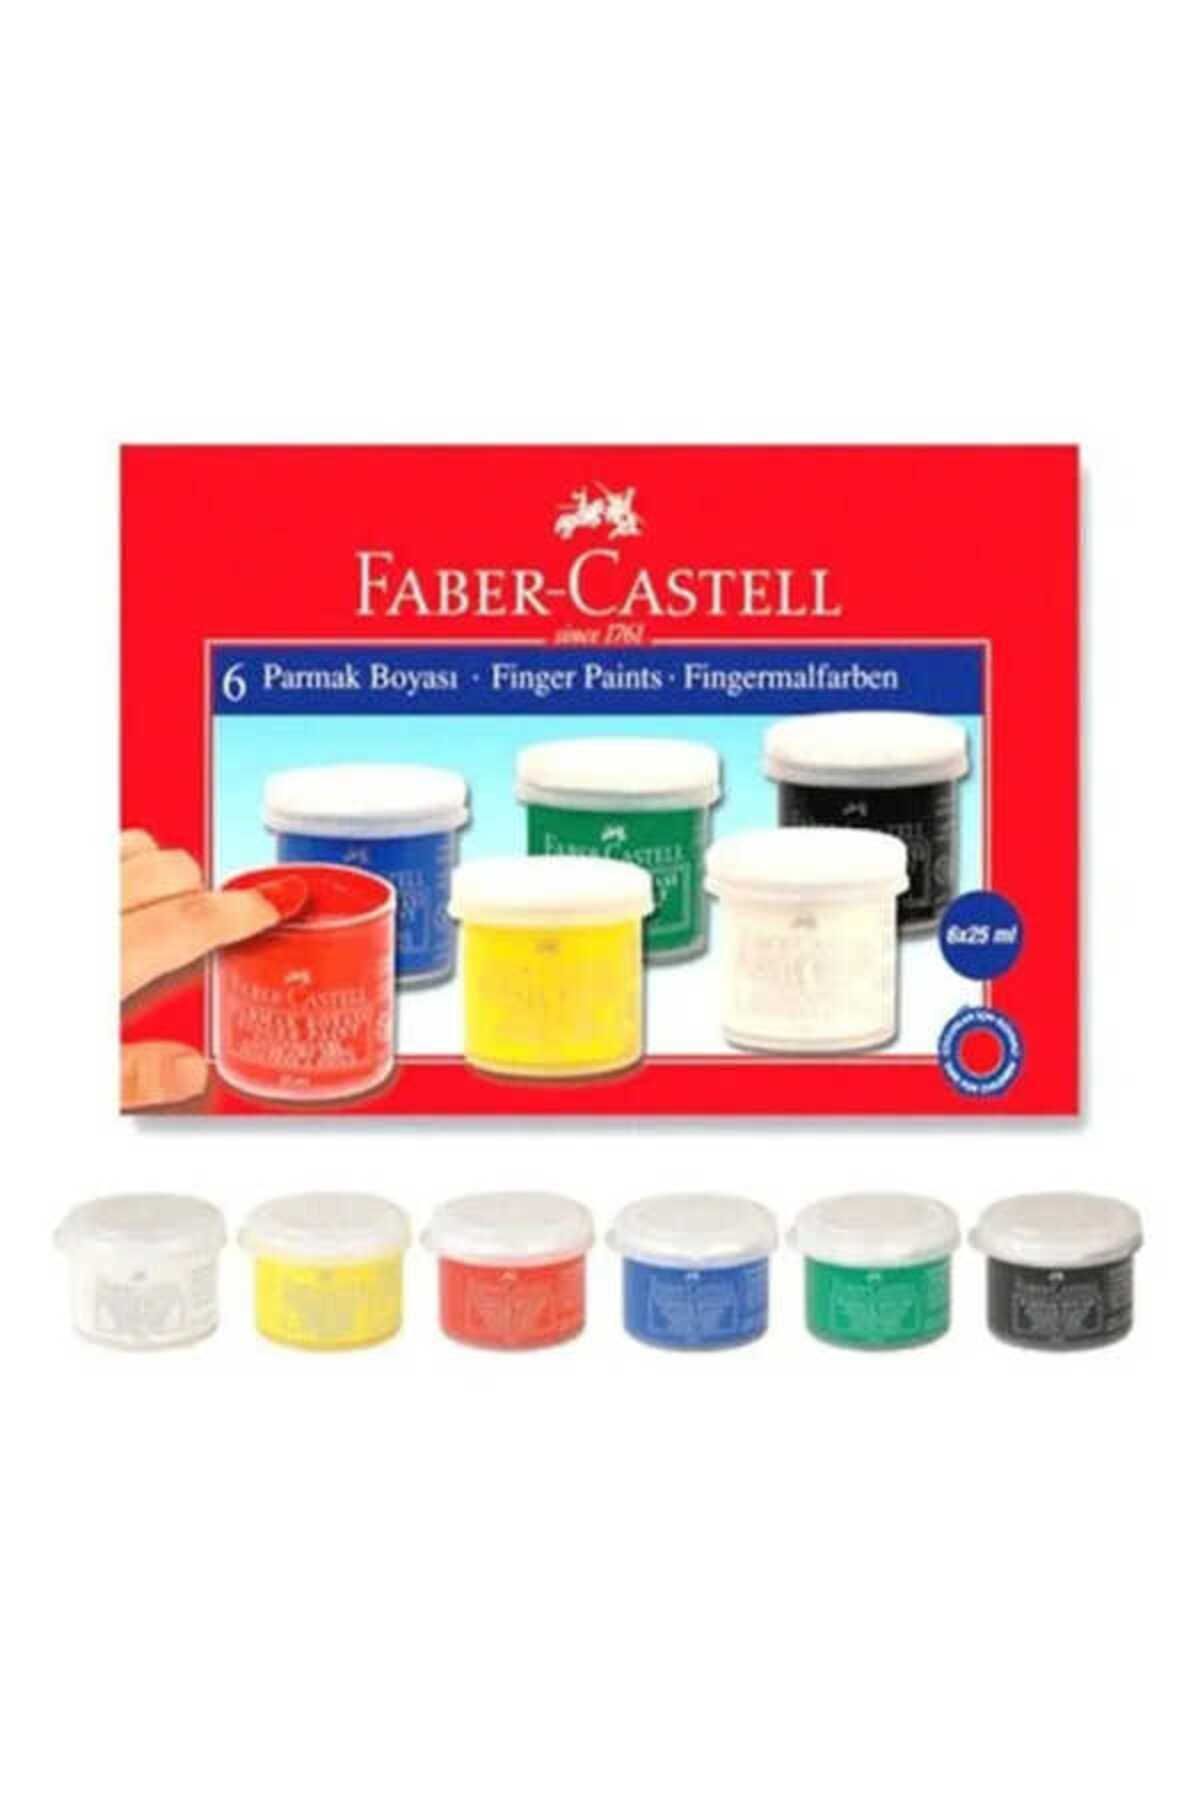 Faber Castell Parmak Boyası 6 Renk 25 ml